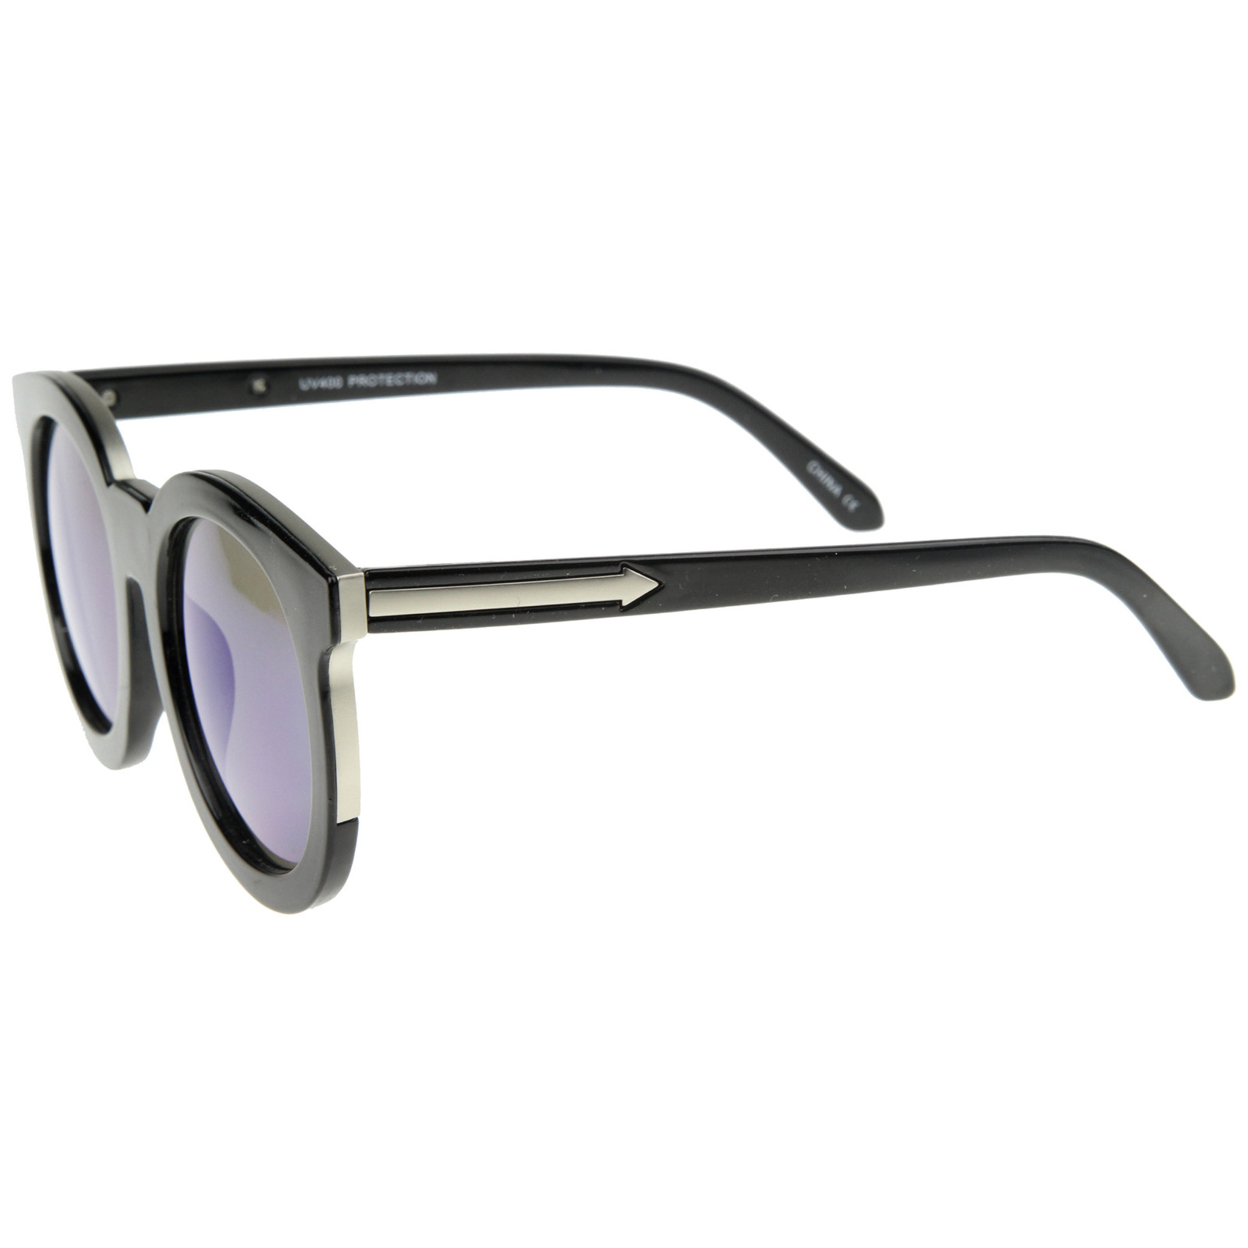 Women's Fashion Oversized Flash Mirrored Flat Lens Round Sunglasses 64mm - Shiny White-Gold / Blue Mirror